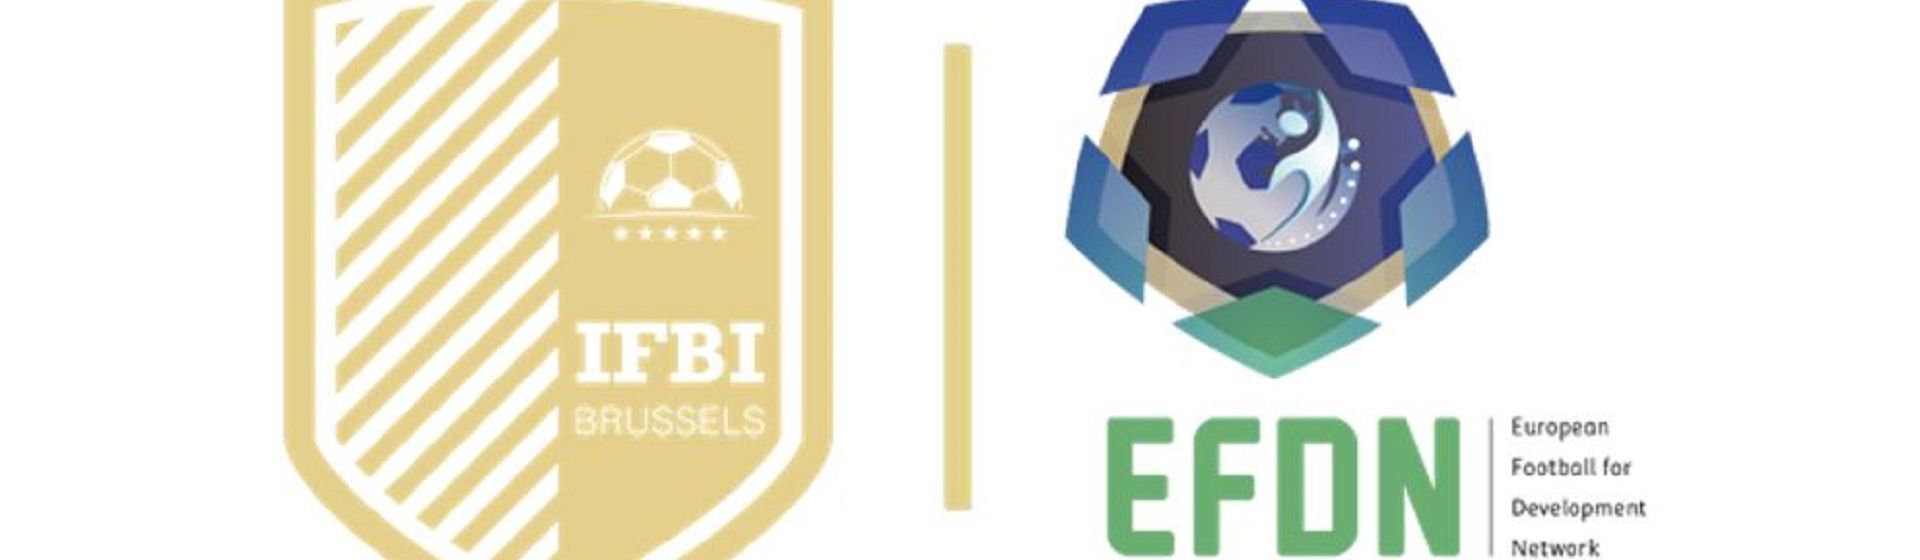 IBFI & EFDN partnership